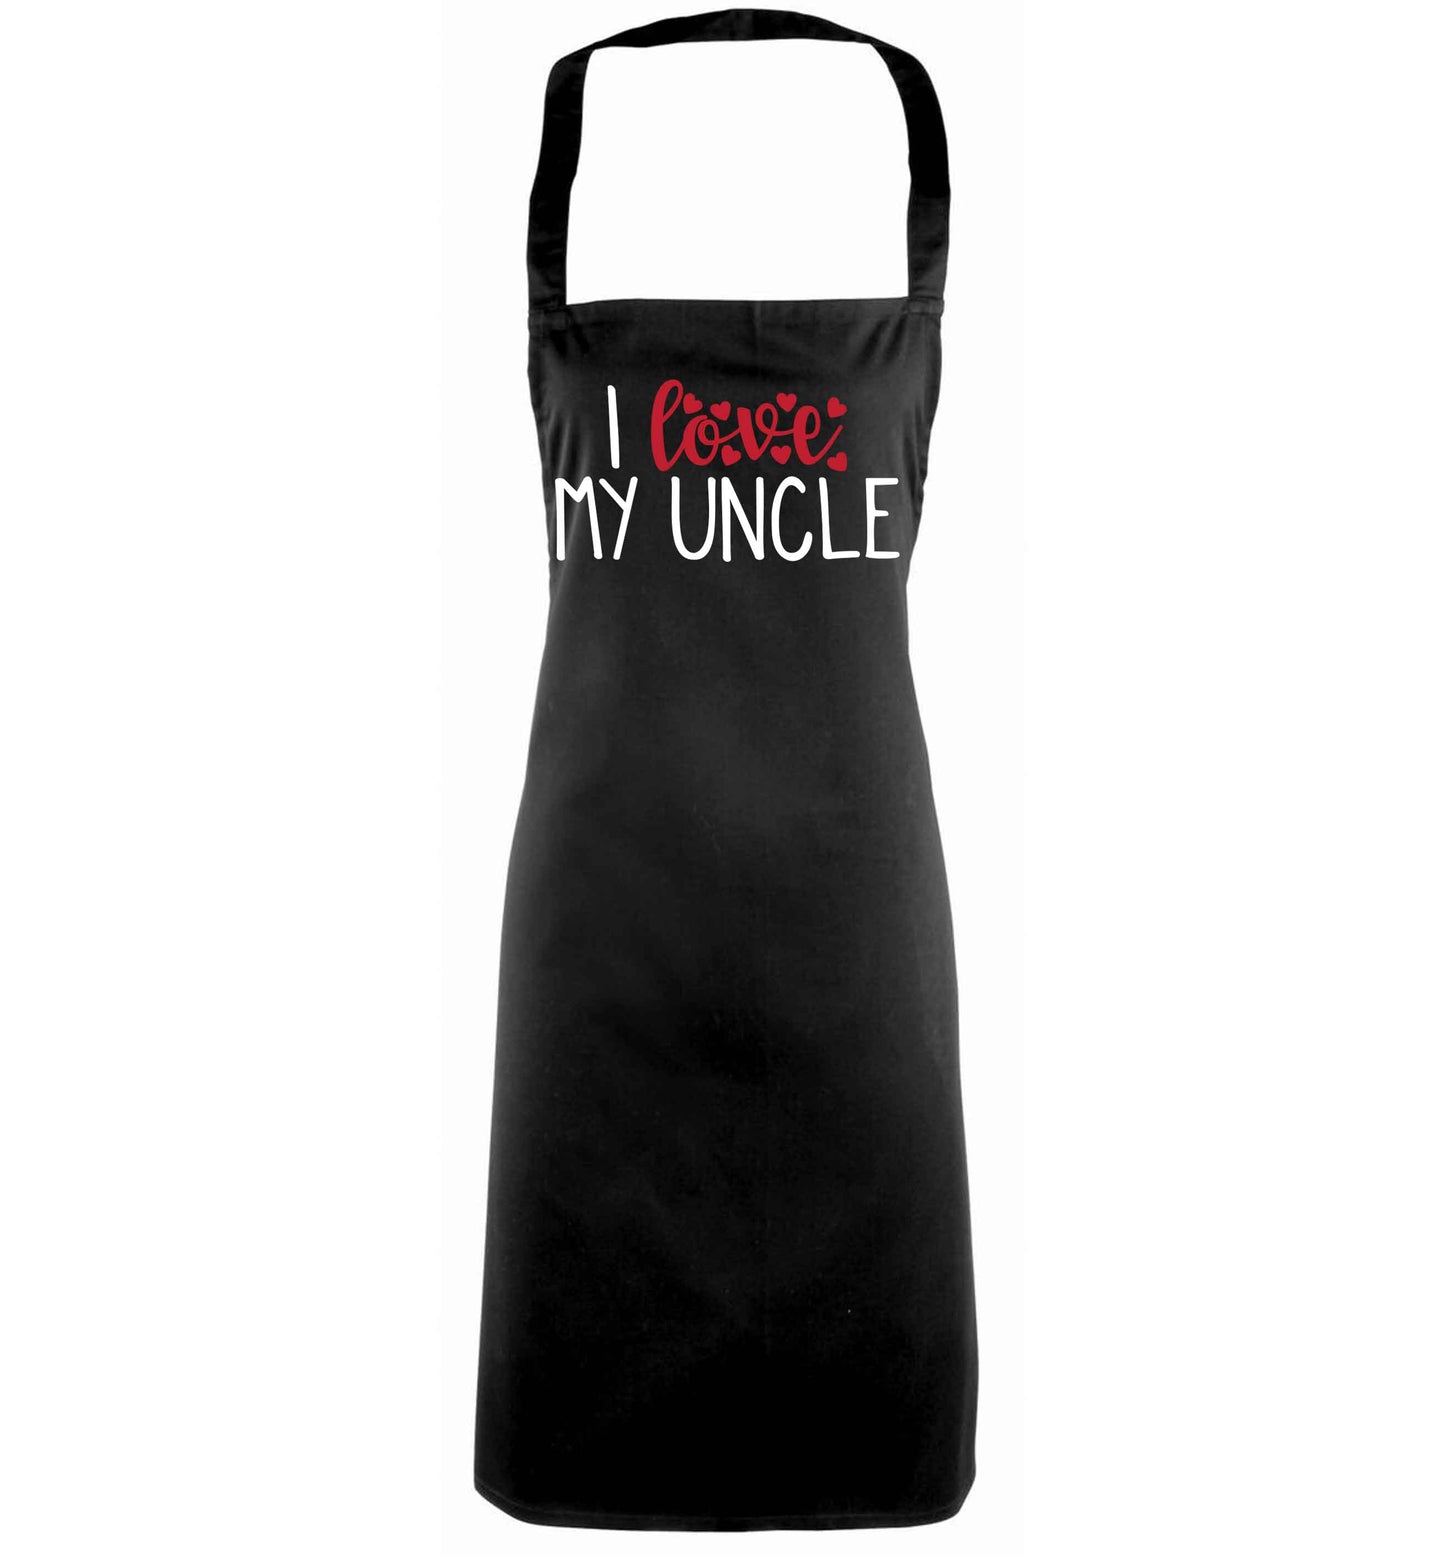 I love my uncle black apron